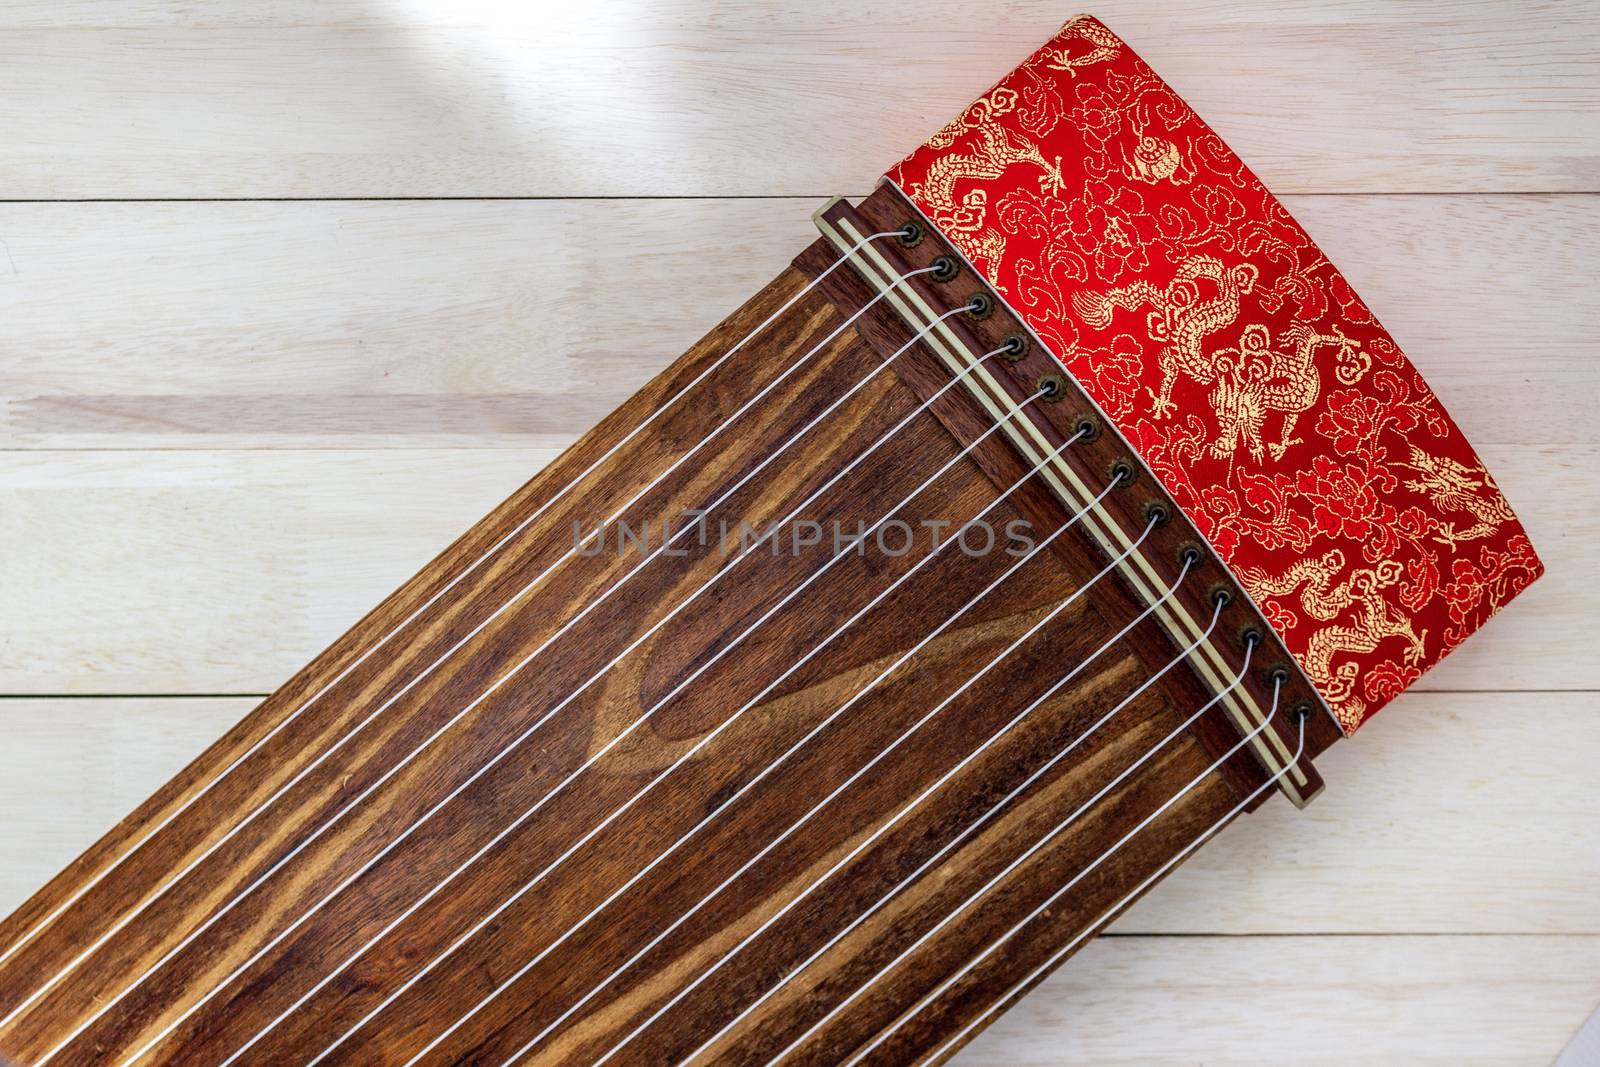 KOTO,Japanese harp,Japanese traditional instrument . by Umbrella